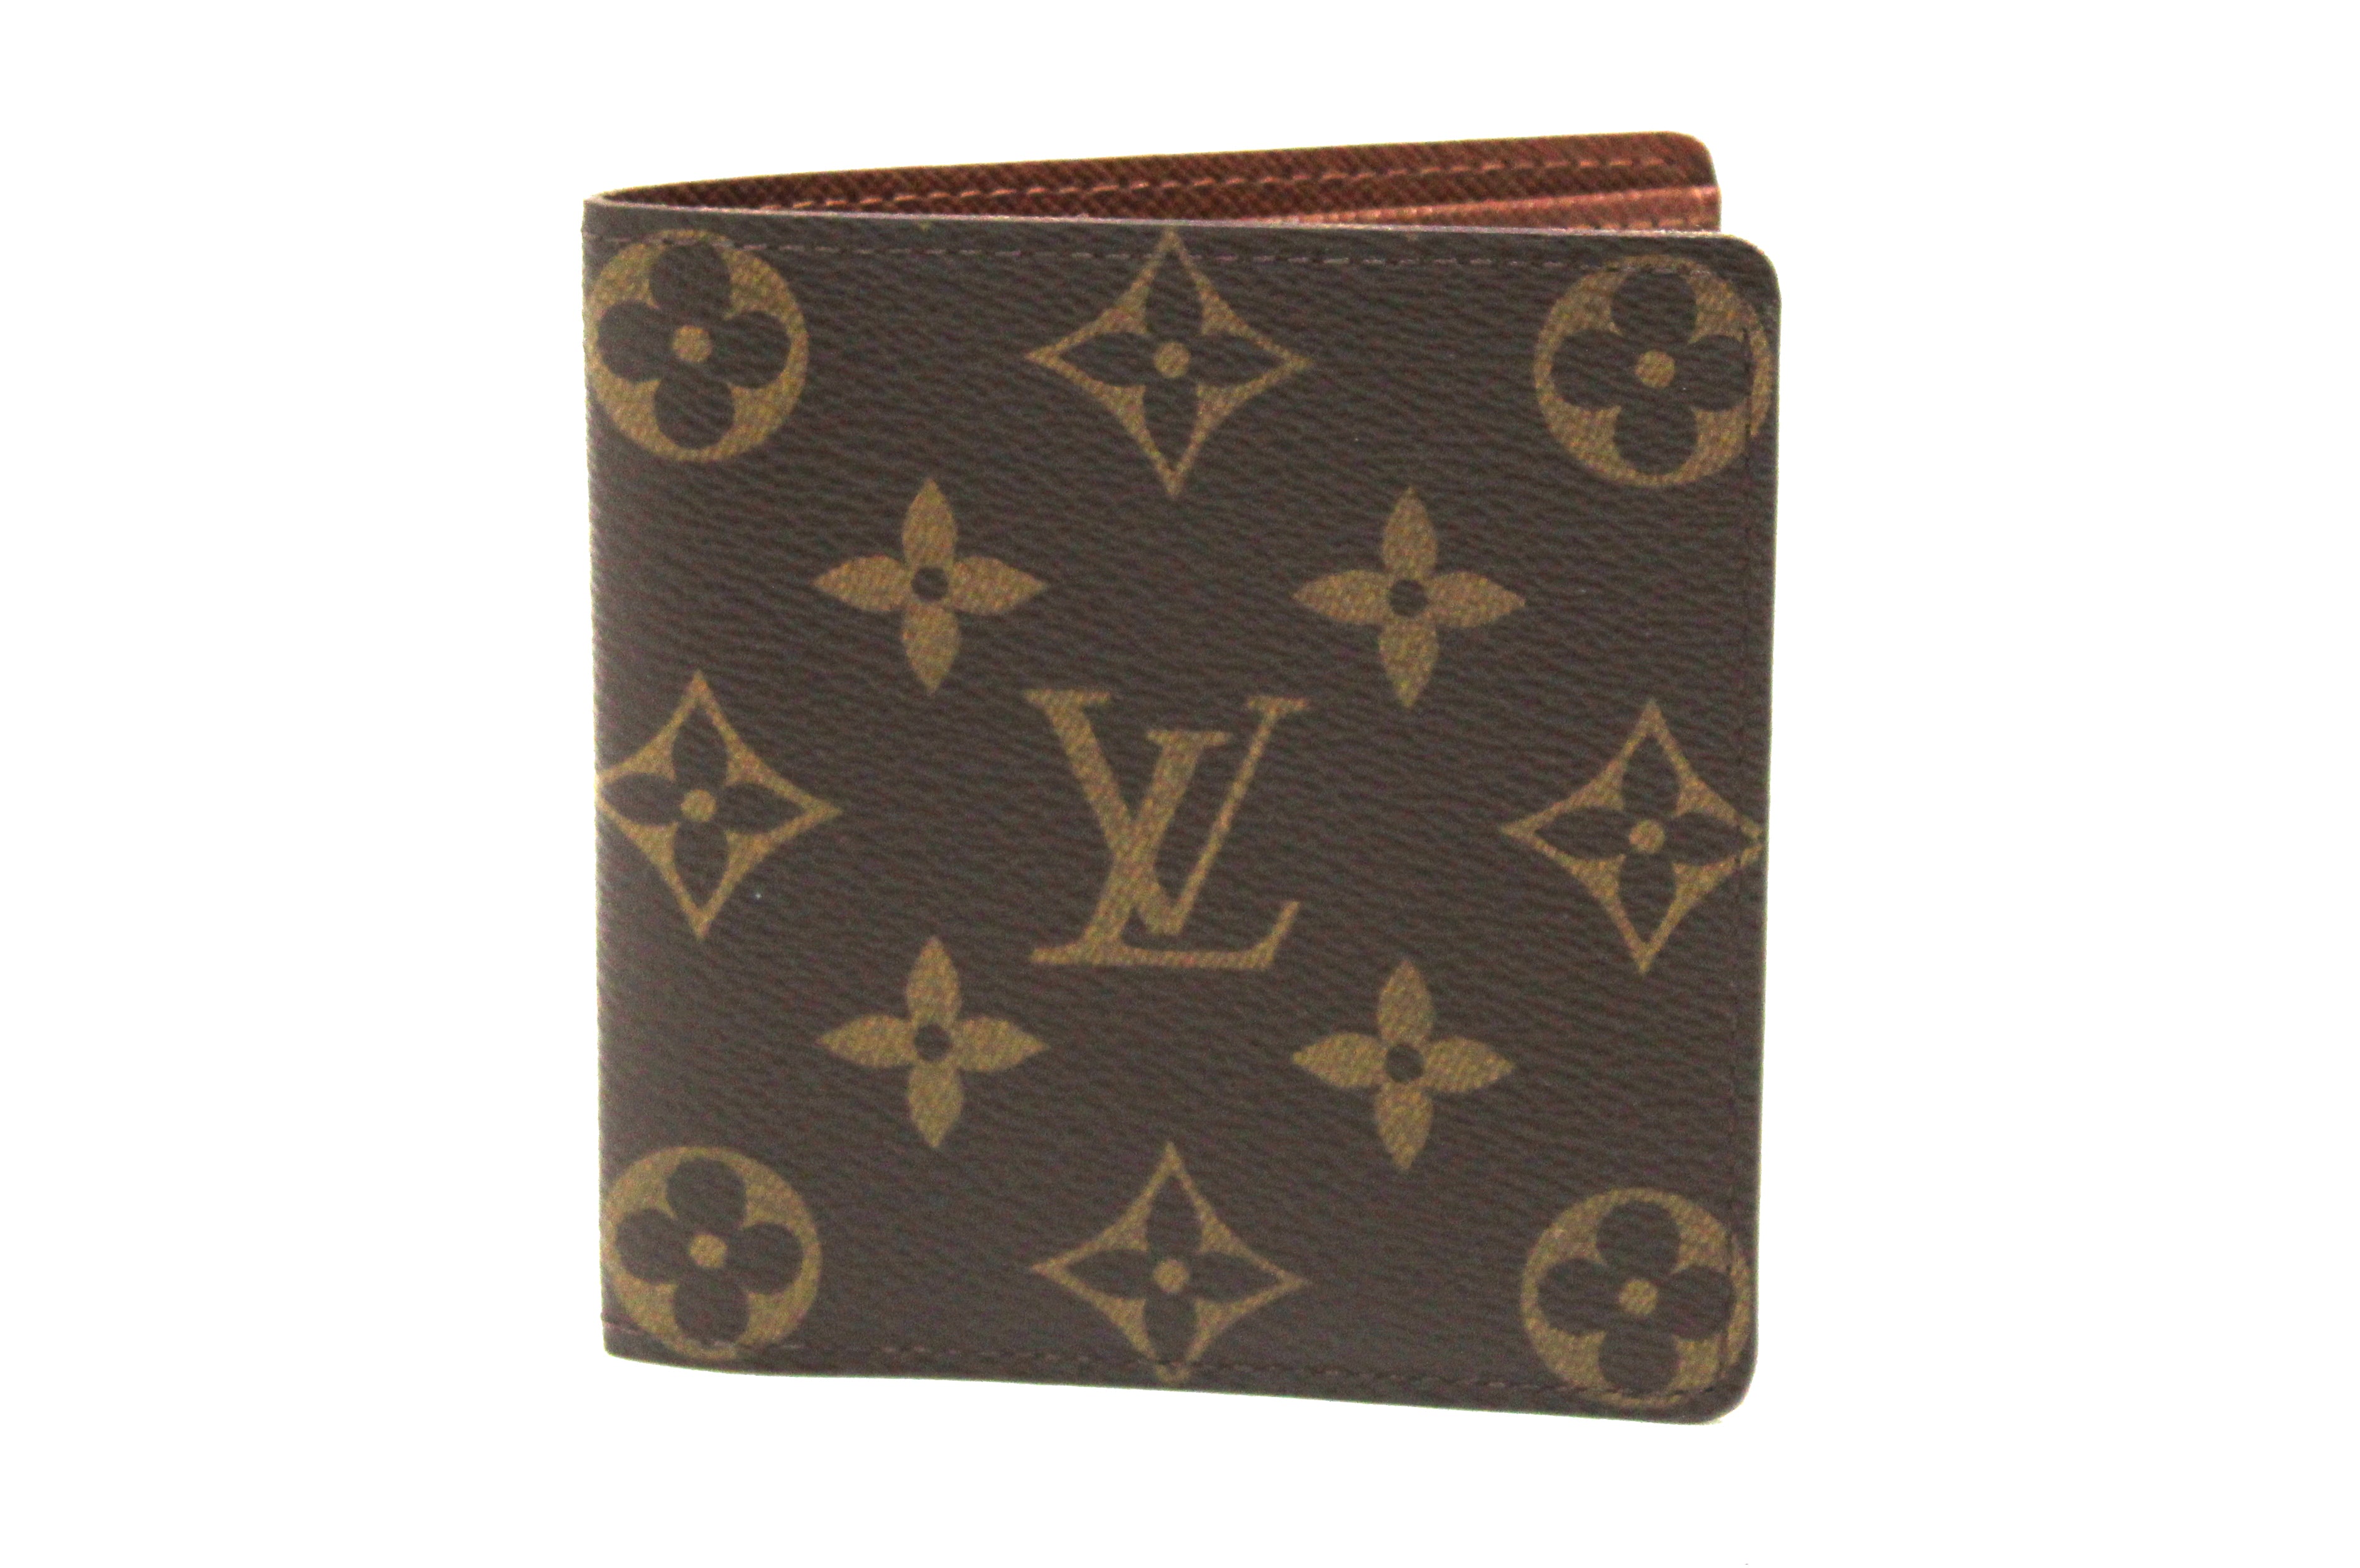 Authentic Louis Vuitton Classic Monogram Billfold Men's Wallet